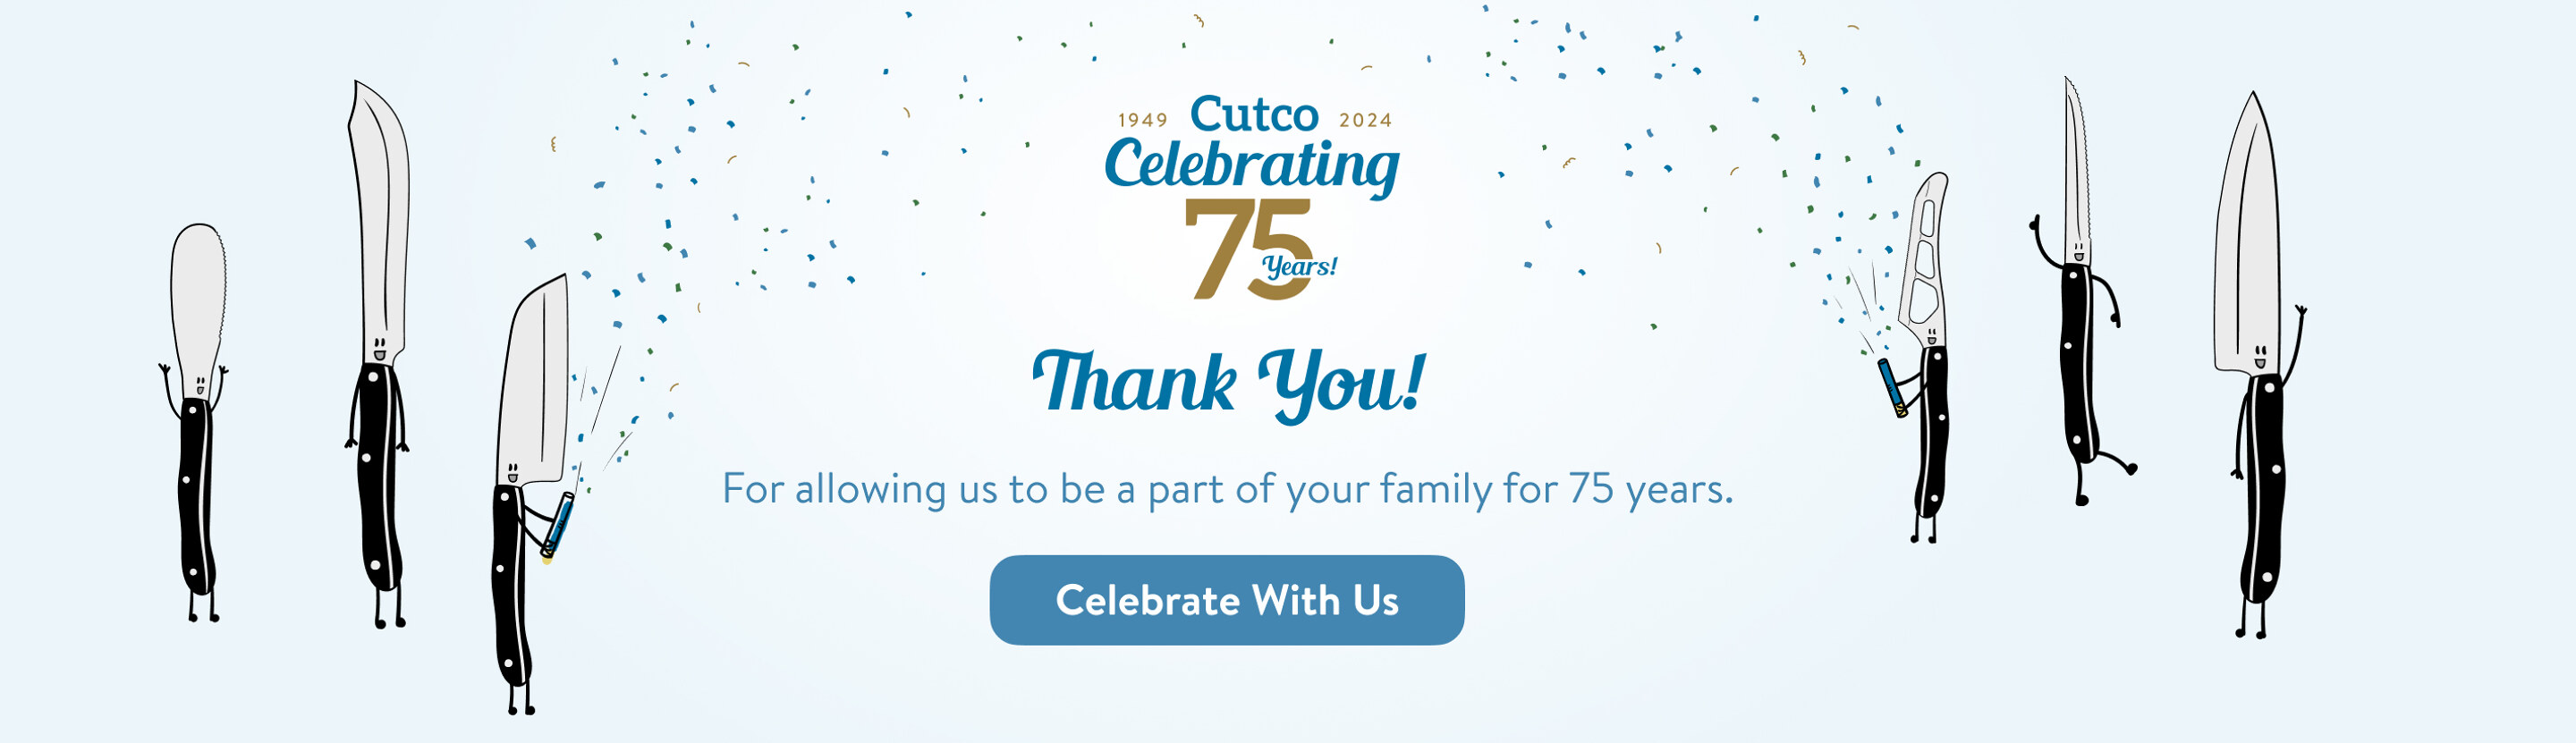 Cutco - Celebrating 75 Years - 1949-2049